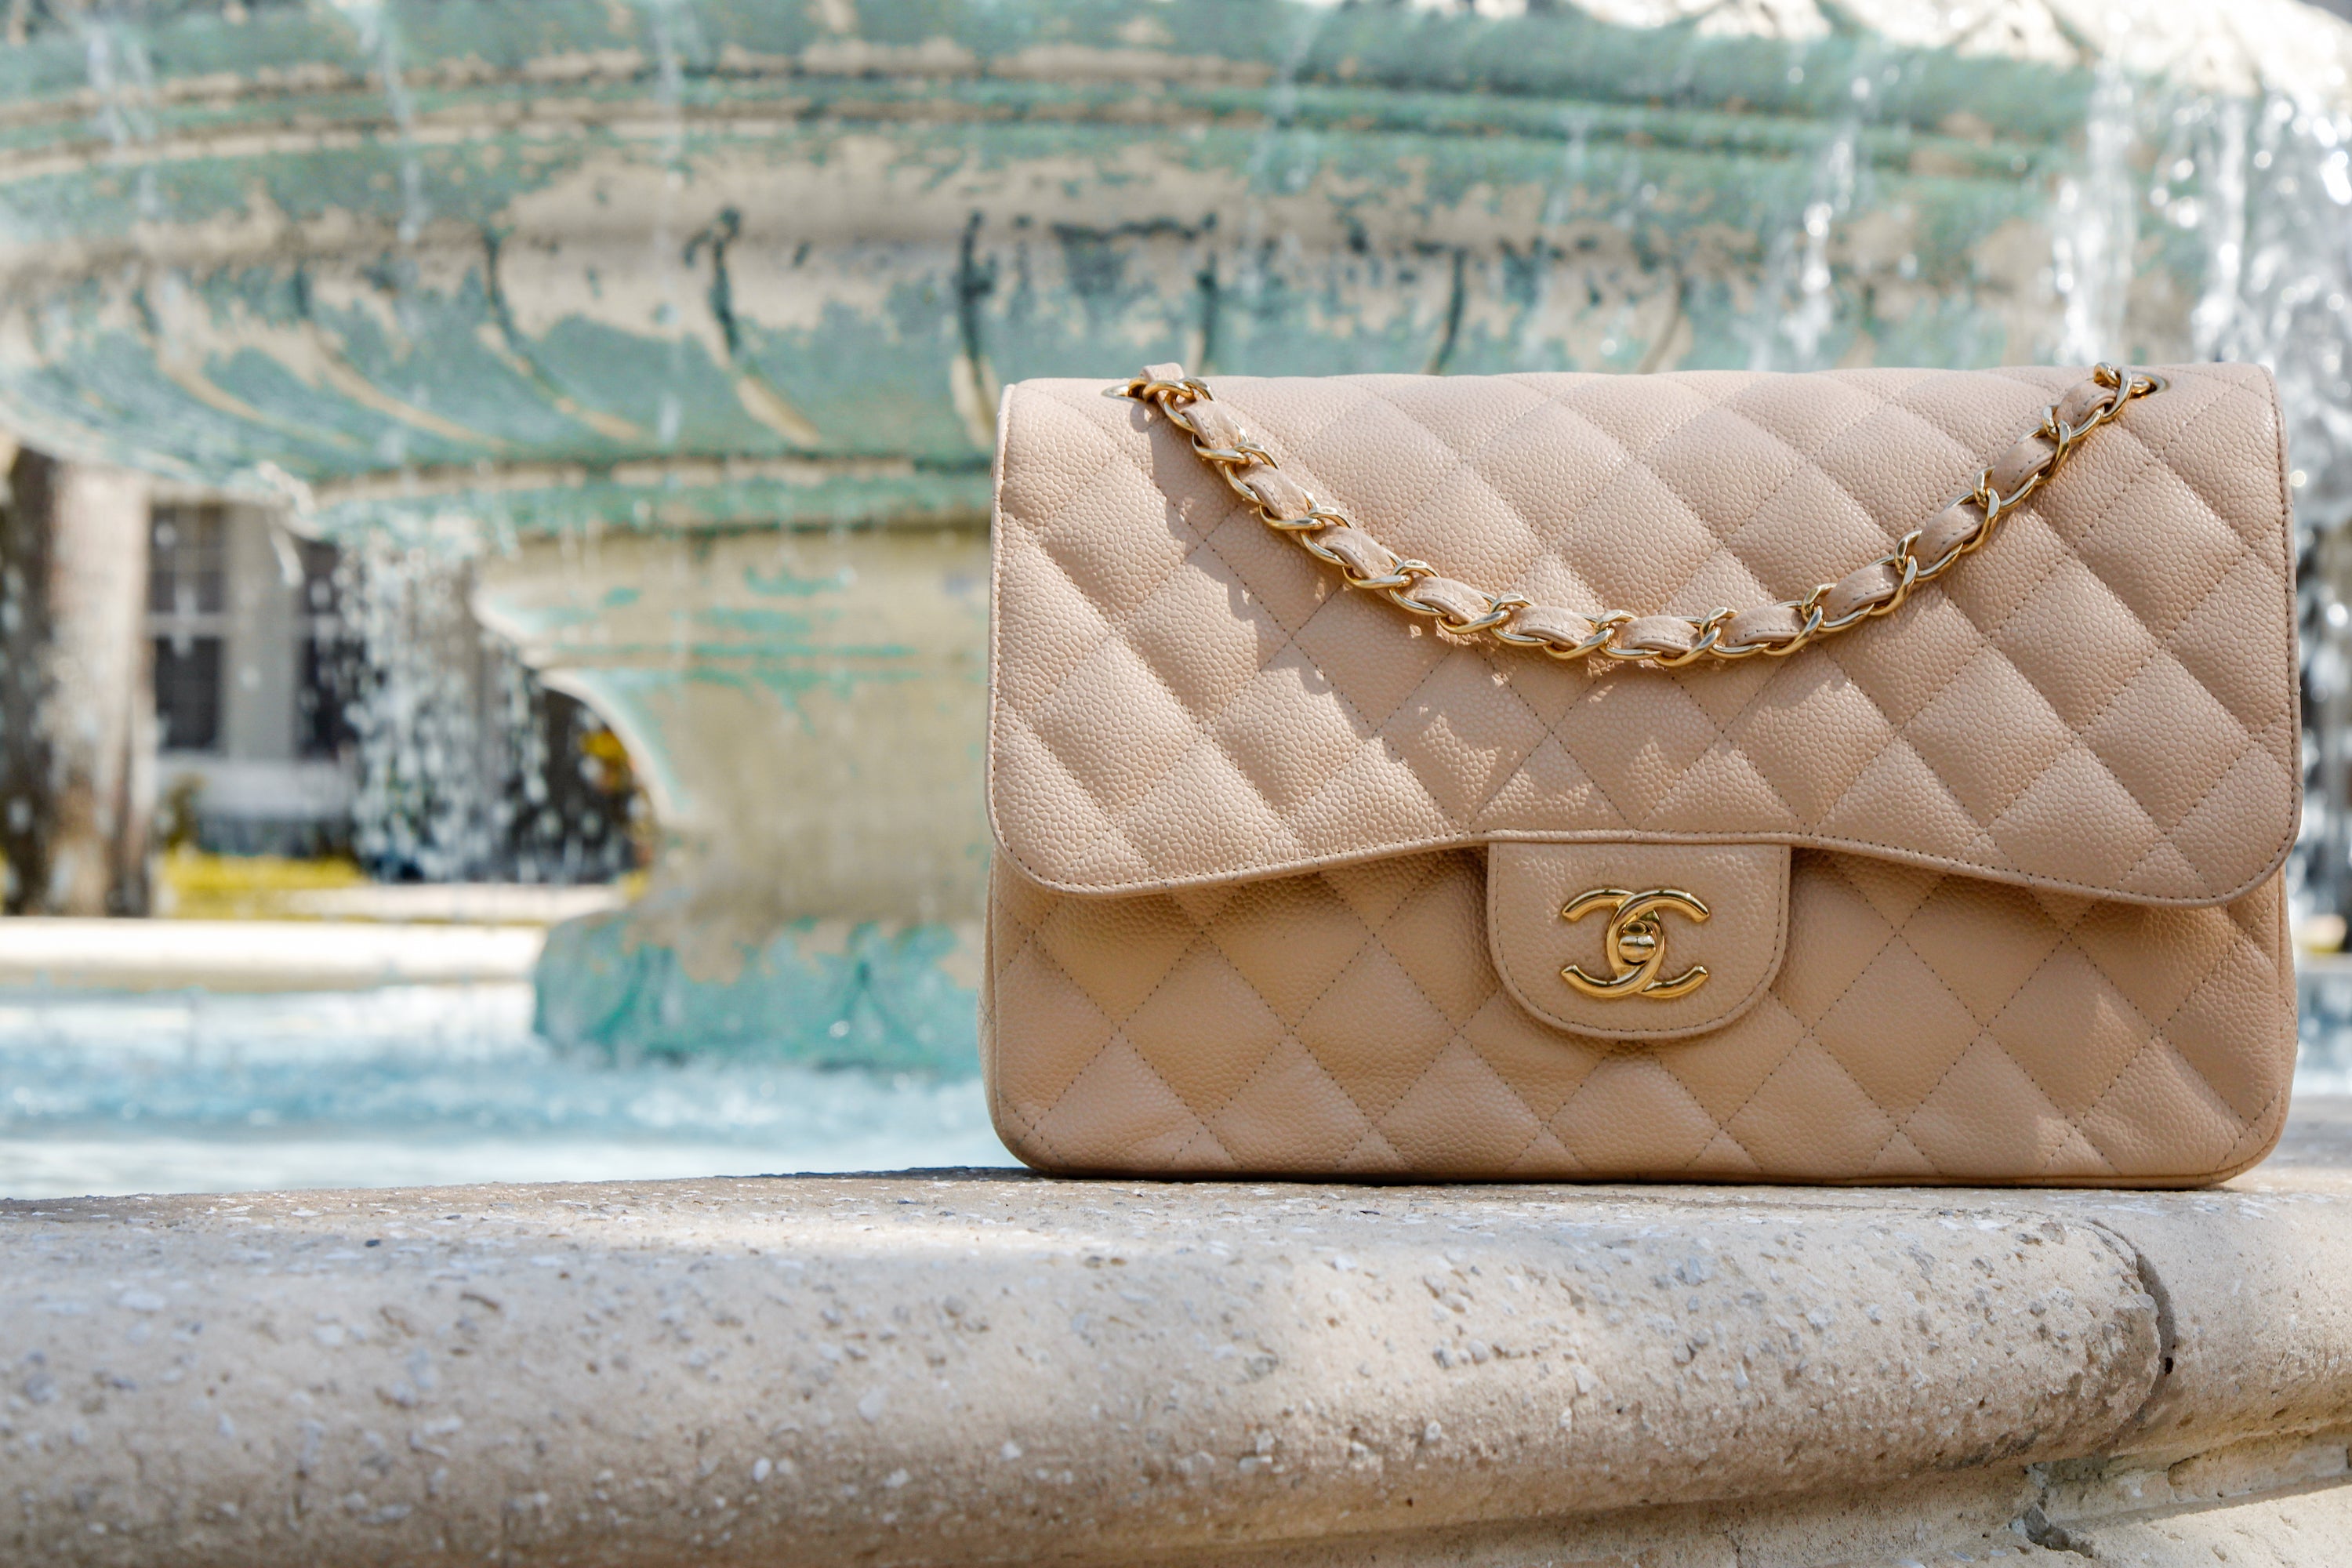 Chanel Bag Price Increase